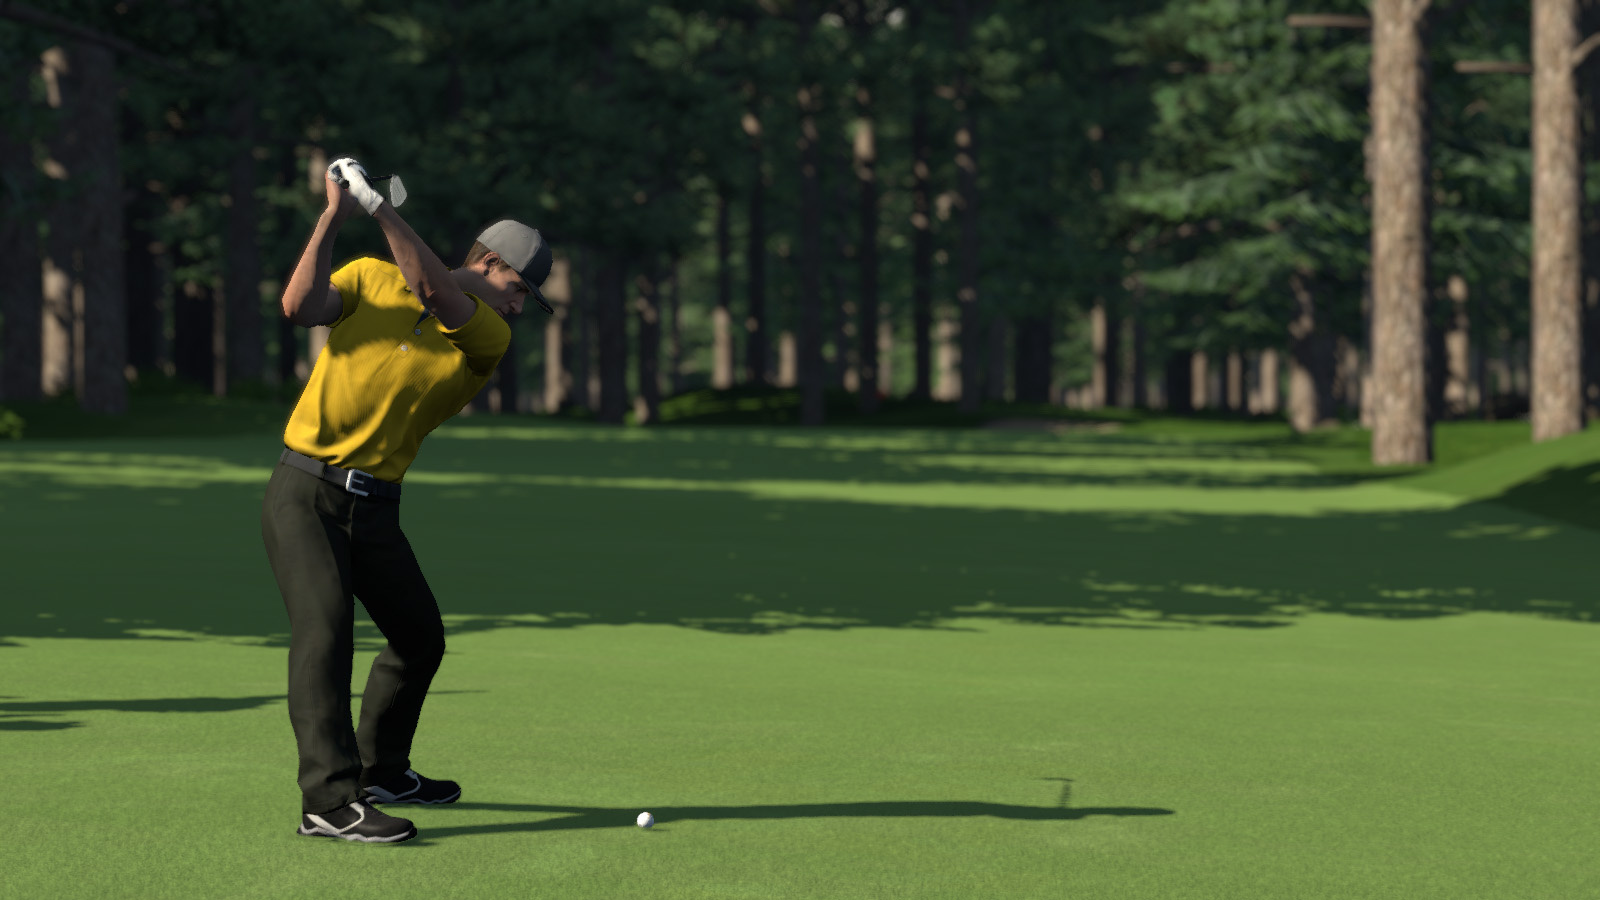 The Golf Club (PS4 / PlayStation 4) News, Reviews, Trailer & Screenshots1600 x 900